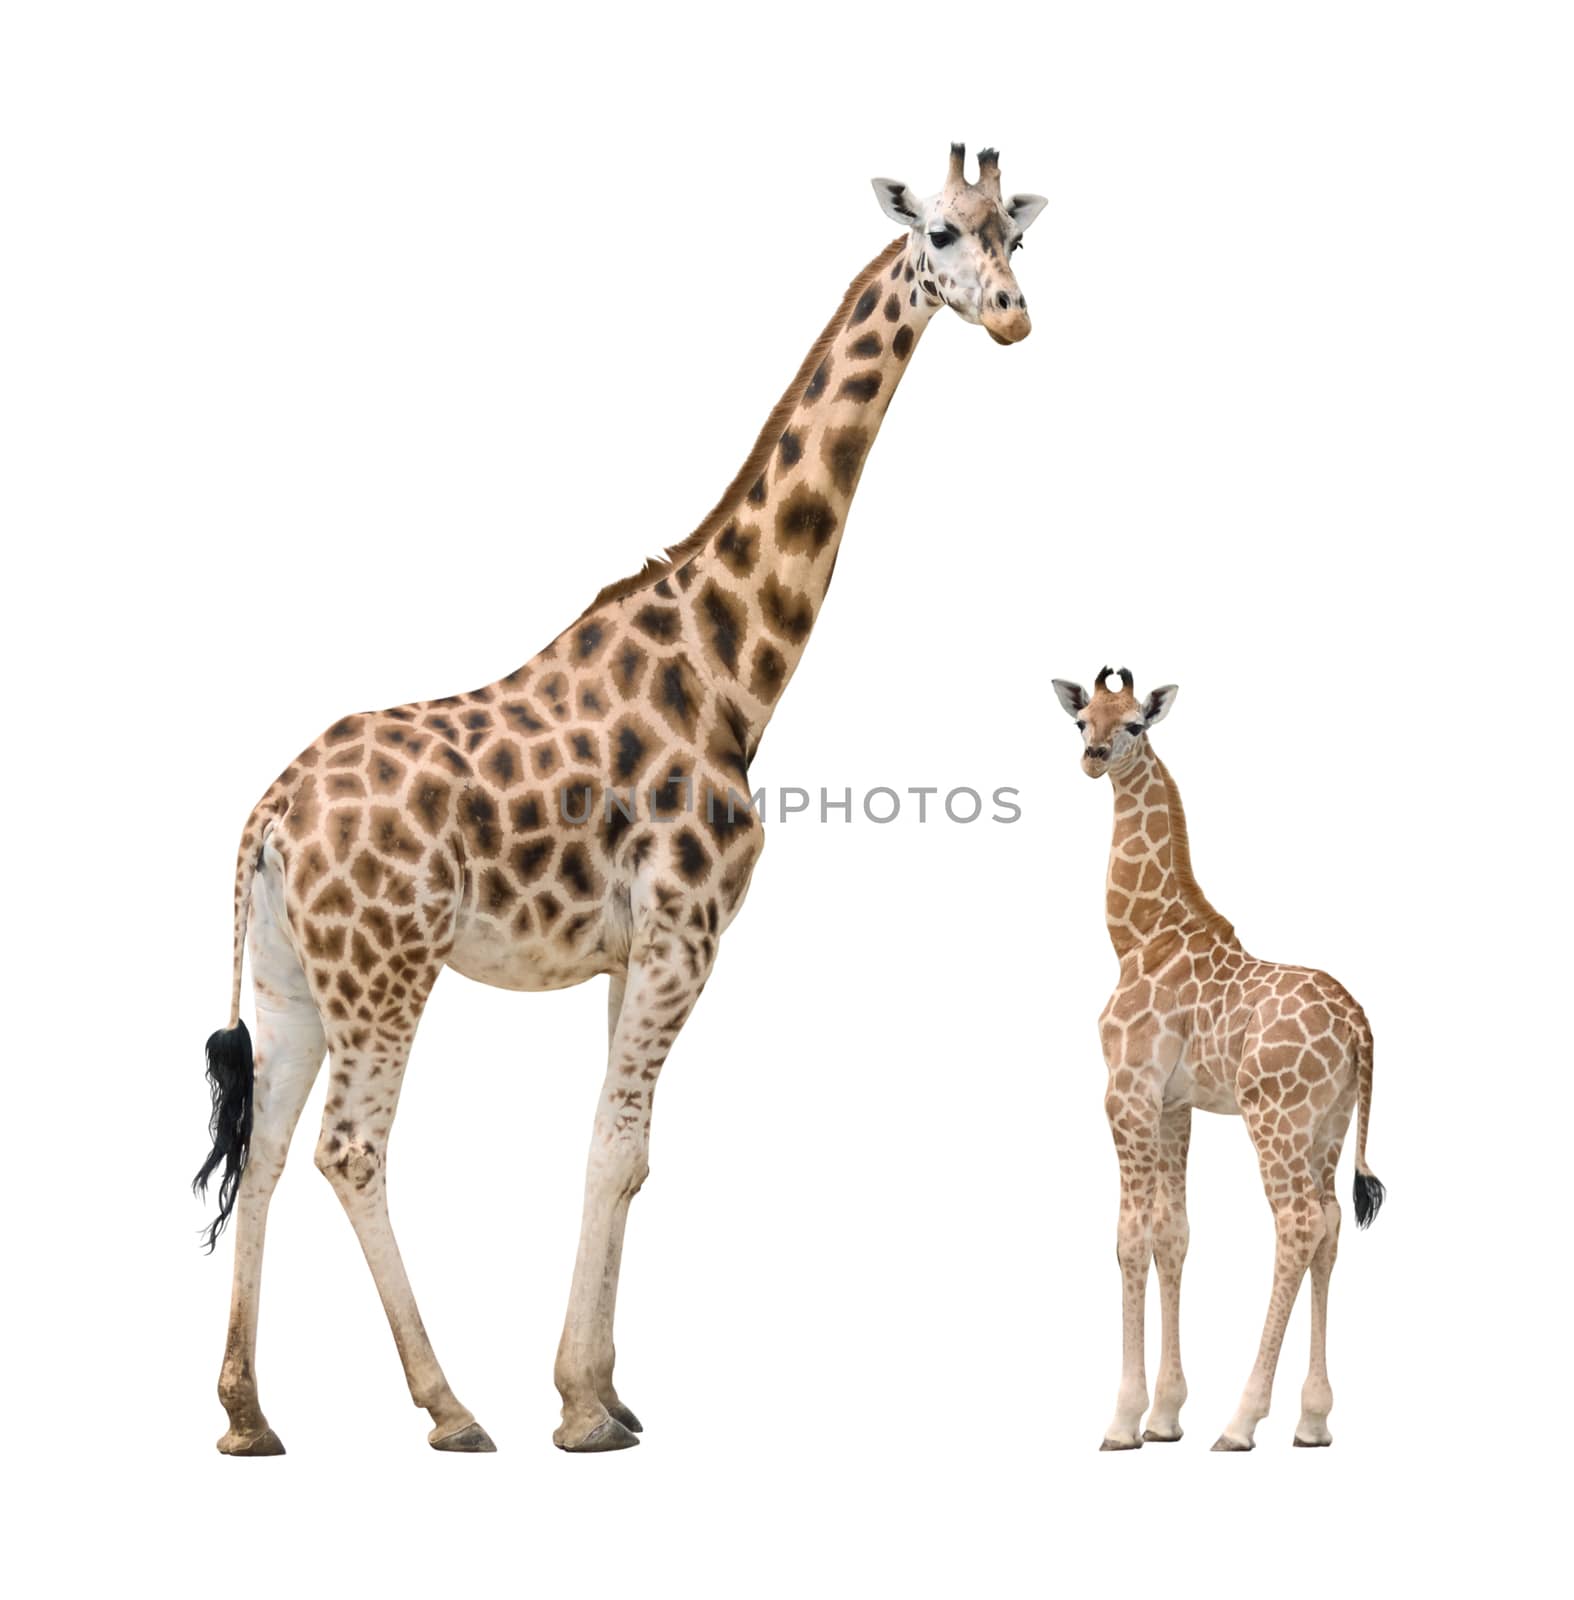 Giraffe mother and baby by vkstudio